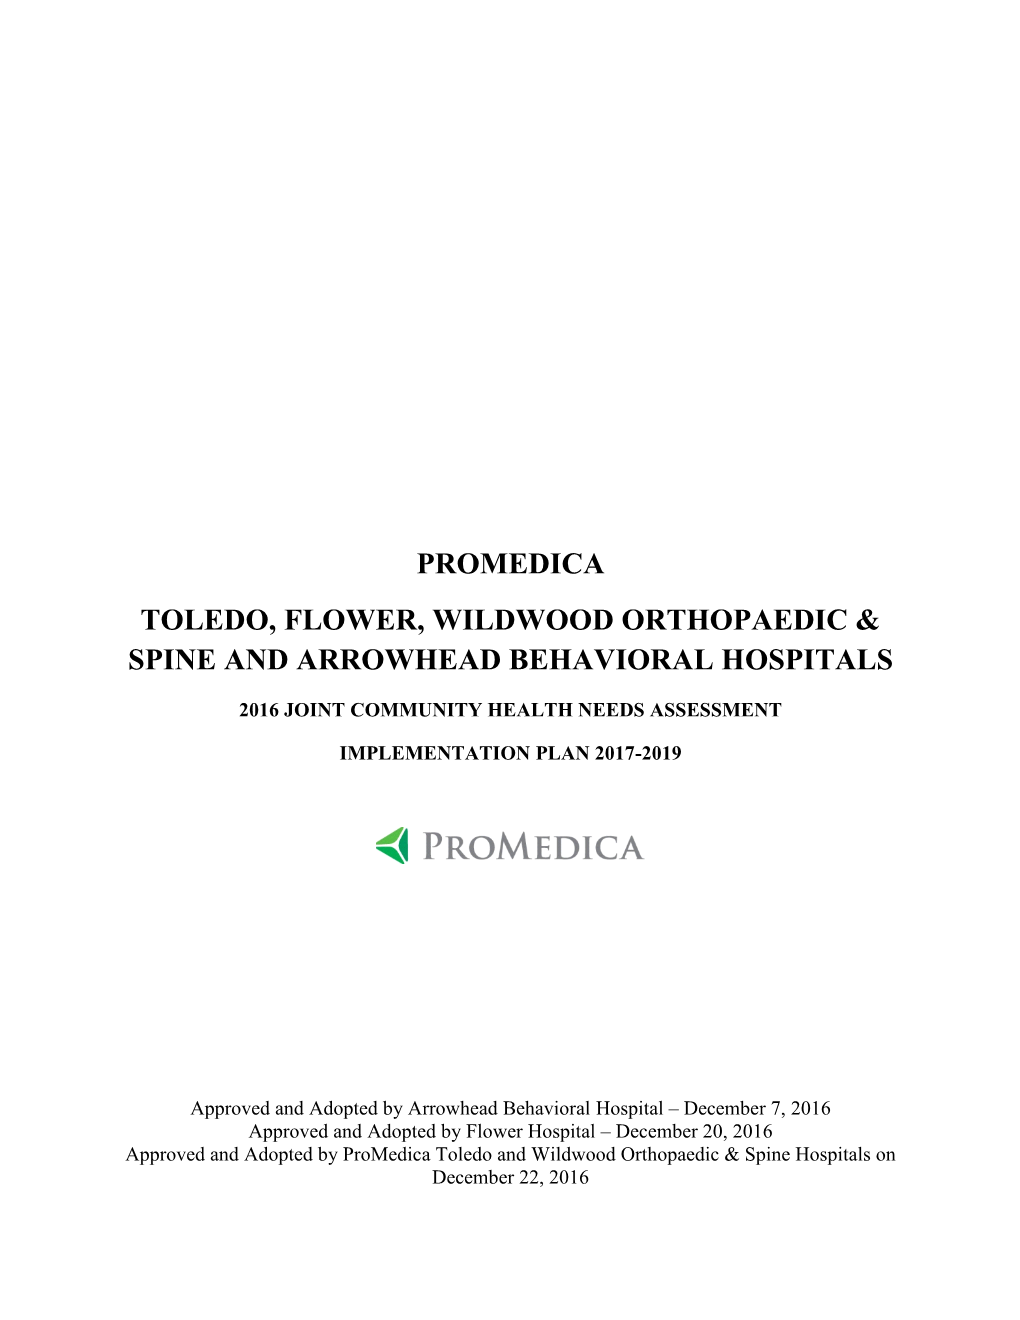 Promedica Toledo, Flower, Wildwood Orthopaedic & Spine and Arrowhead Behavioral Hospitals